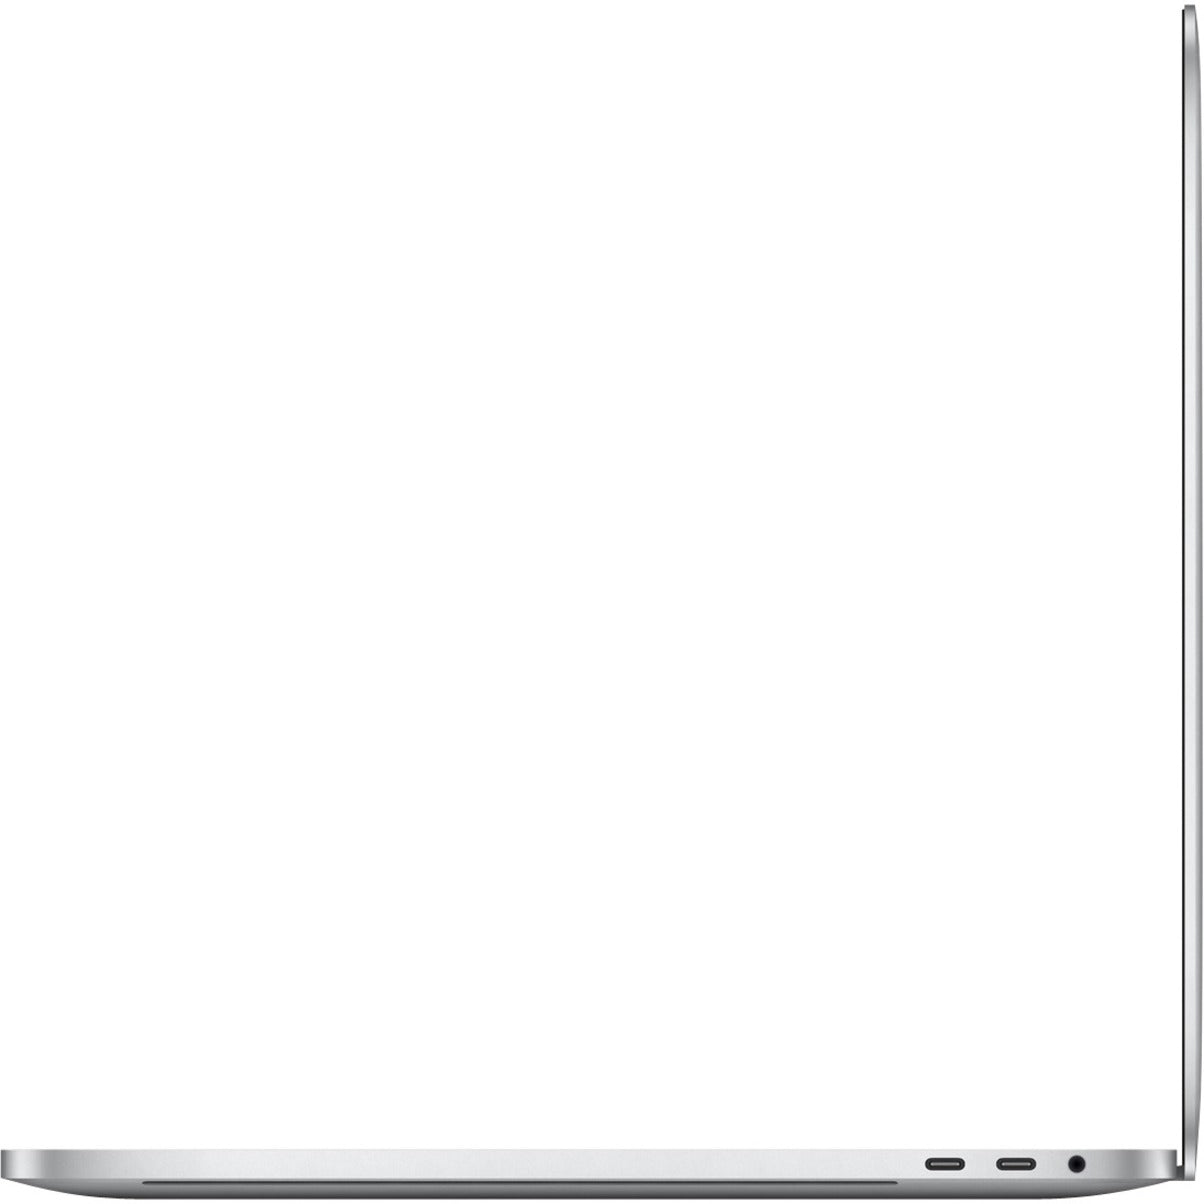 Apple MVVL2LL/A MacBook Pro 16-inch Silver, 2.6GHz 6-Core i7, 16GB RAM, 512GB SSD